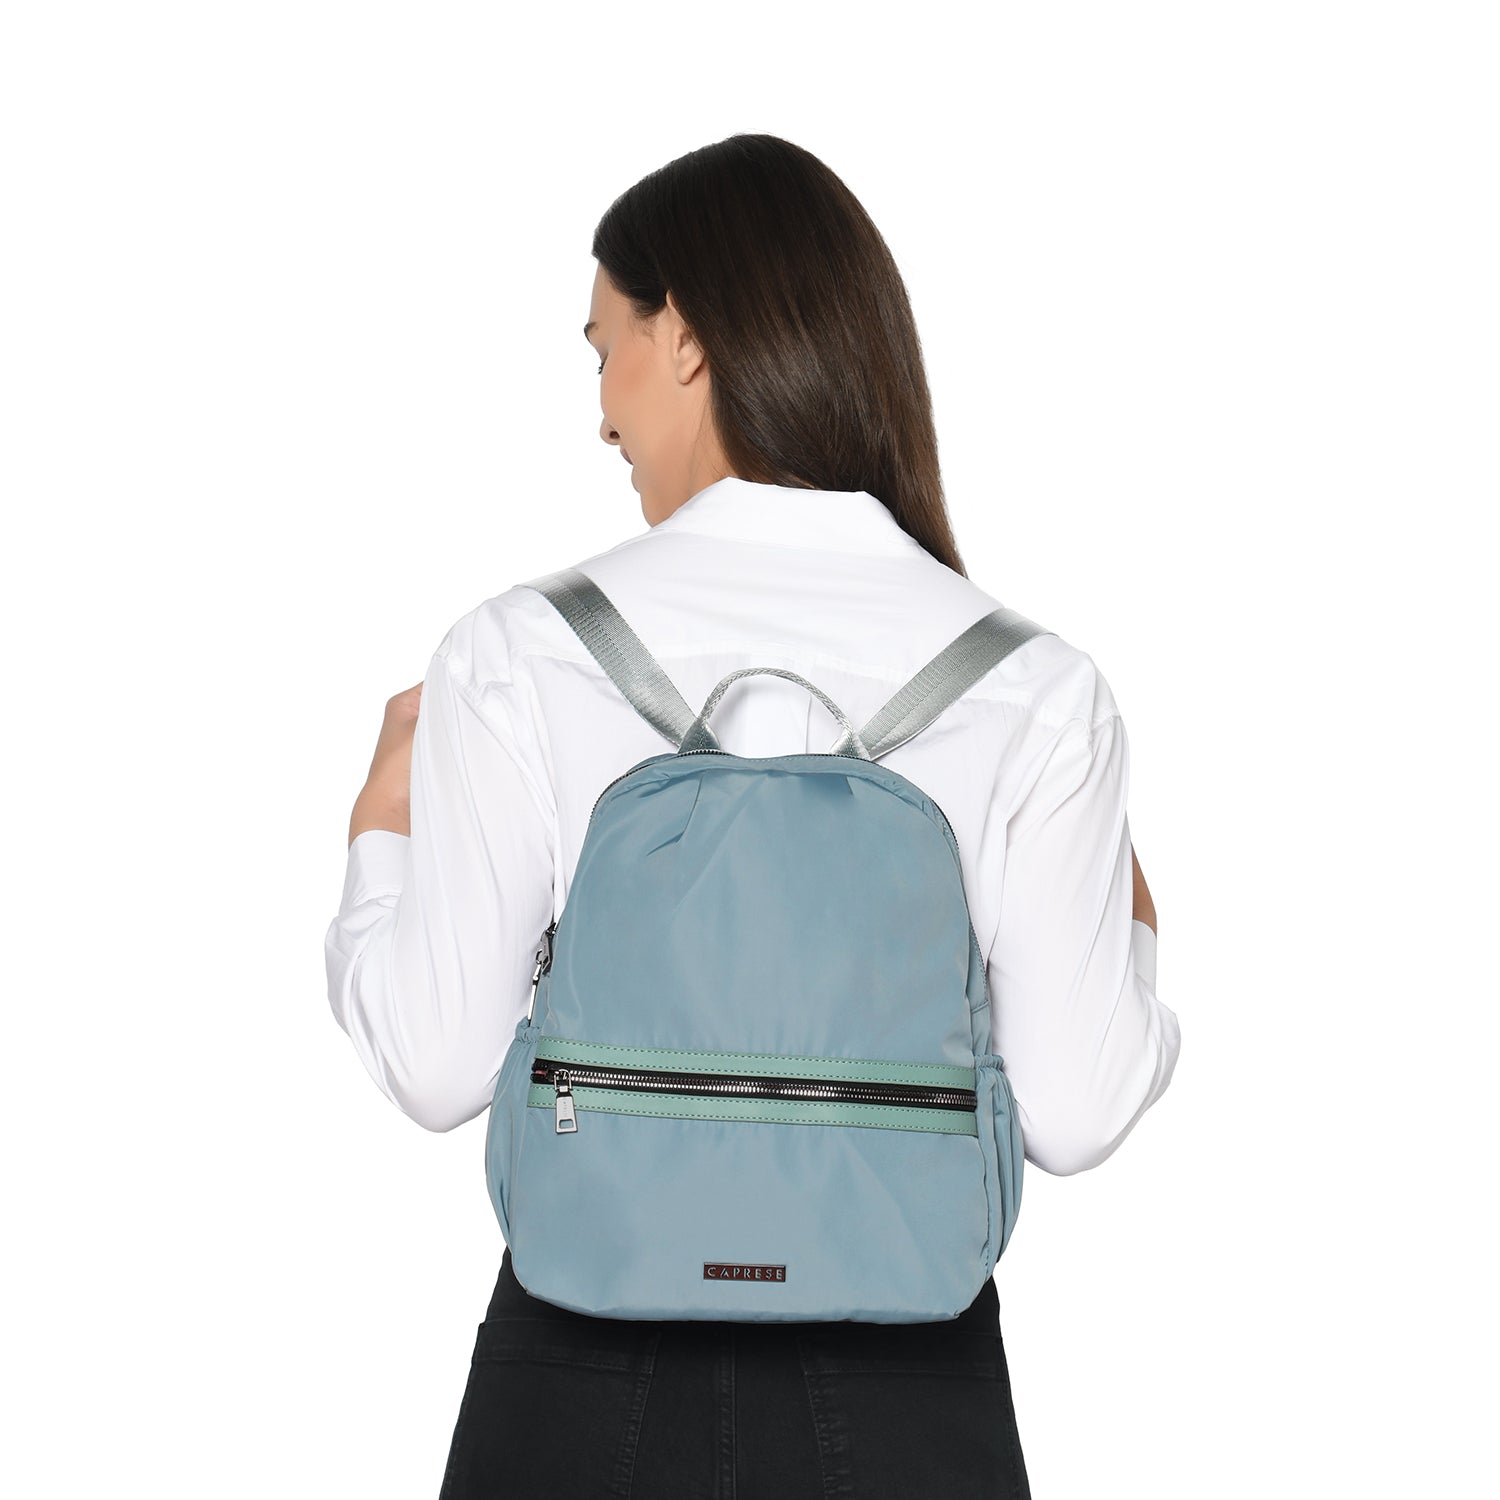 Caprese Blythe Nylon Backpack Medium